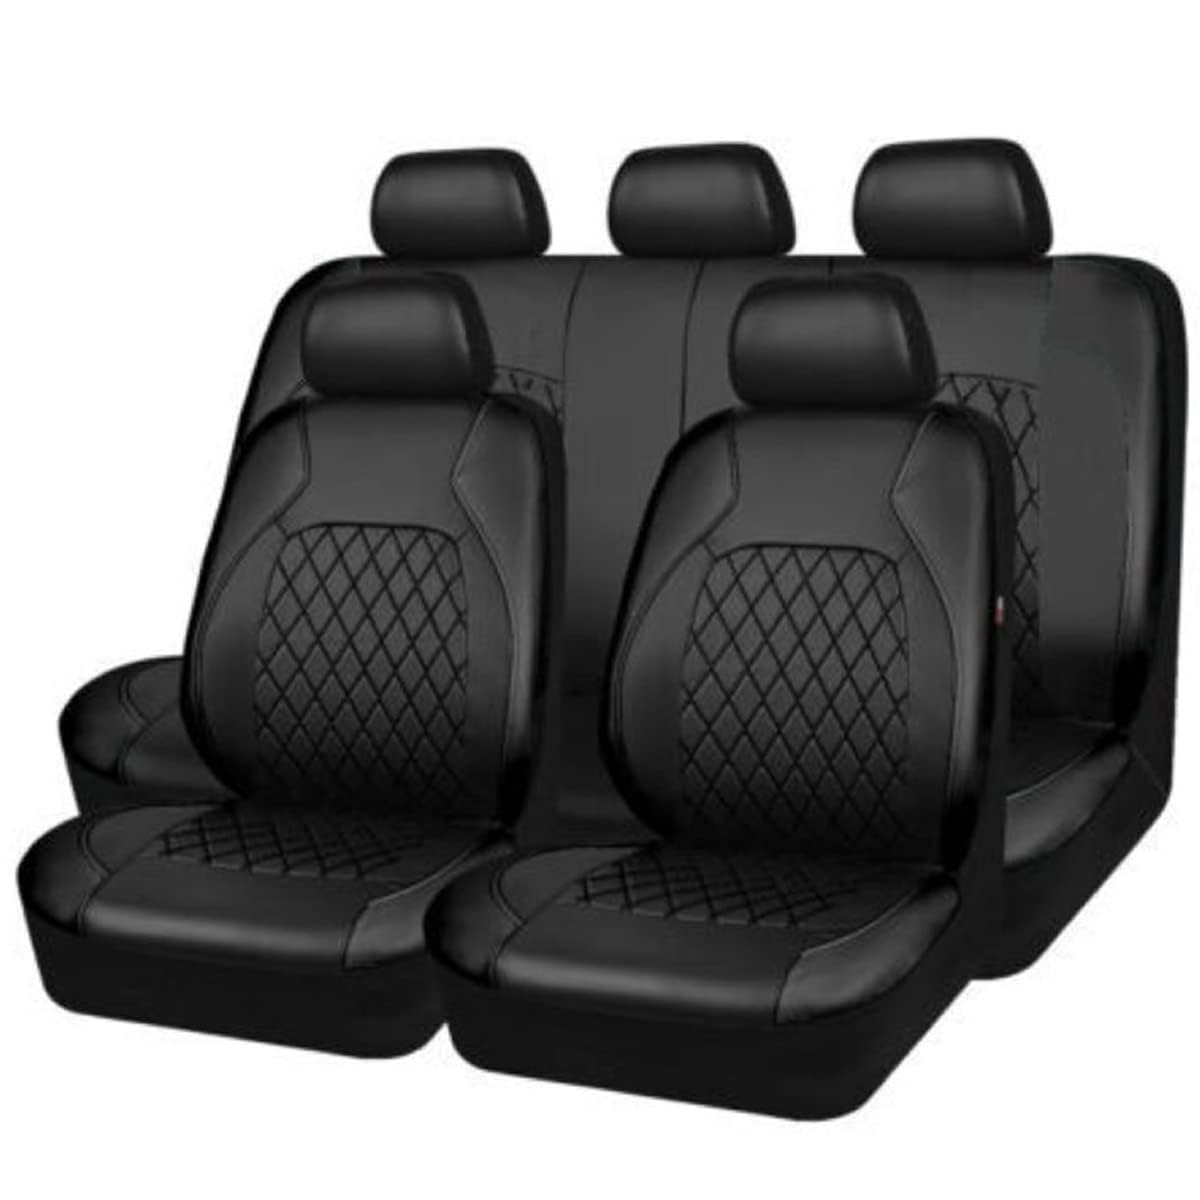 CAALO Auto Leder Sitzschoner Set für Seat Ateca 2016+,Auto Schonbezug Full Set Leder Sitzbezug Vordersitze Rücksitzschoner Auto Zubehör,A-Black von CAALO